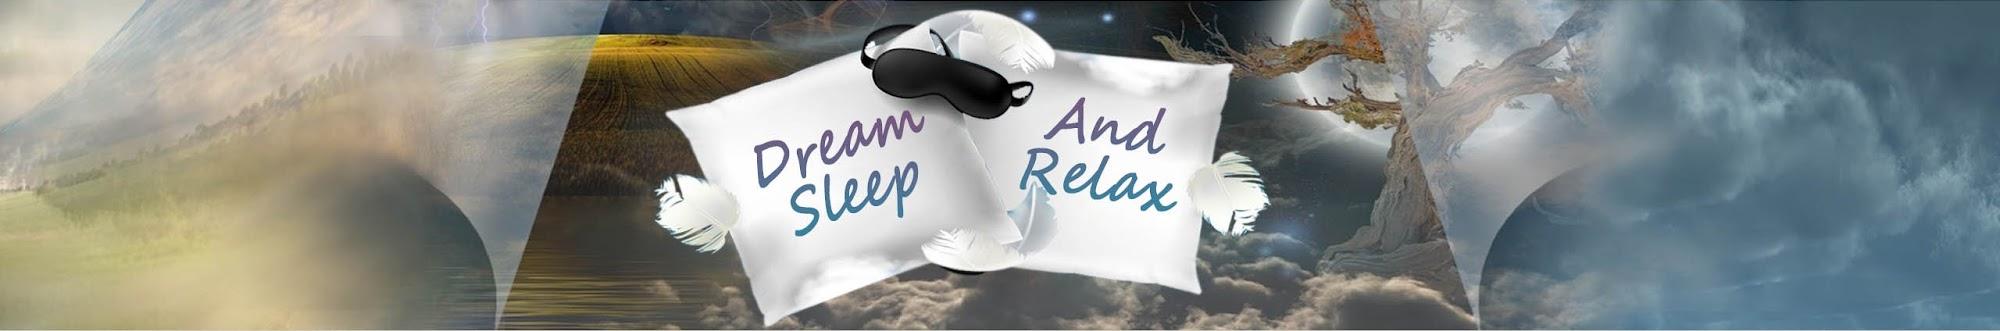 Dream Sleep & Relax